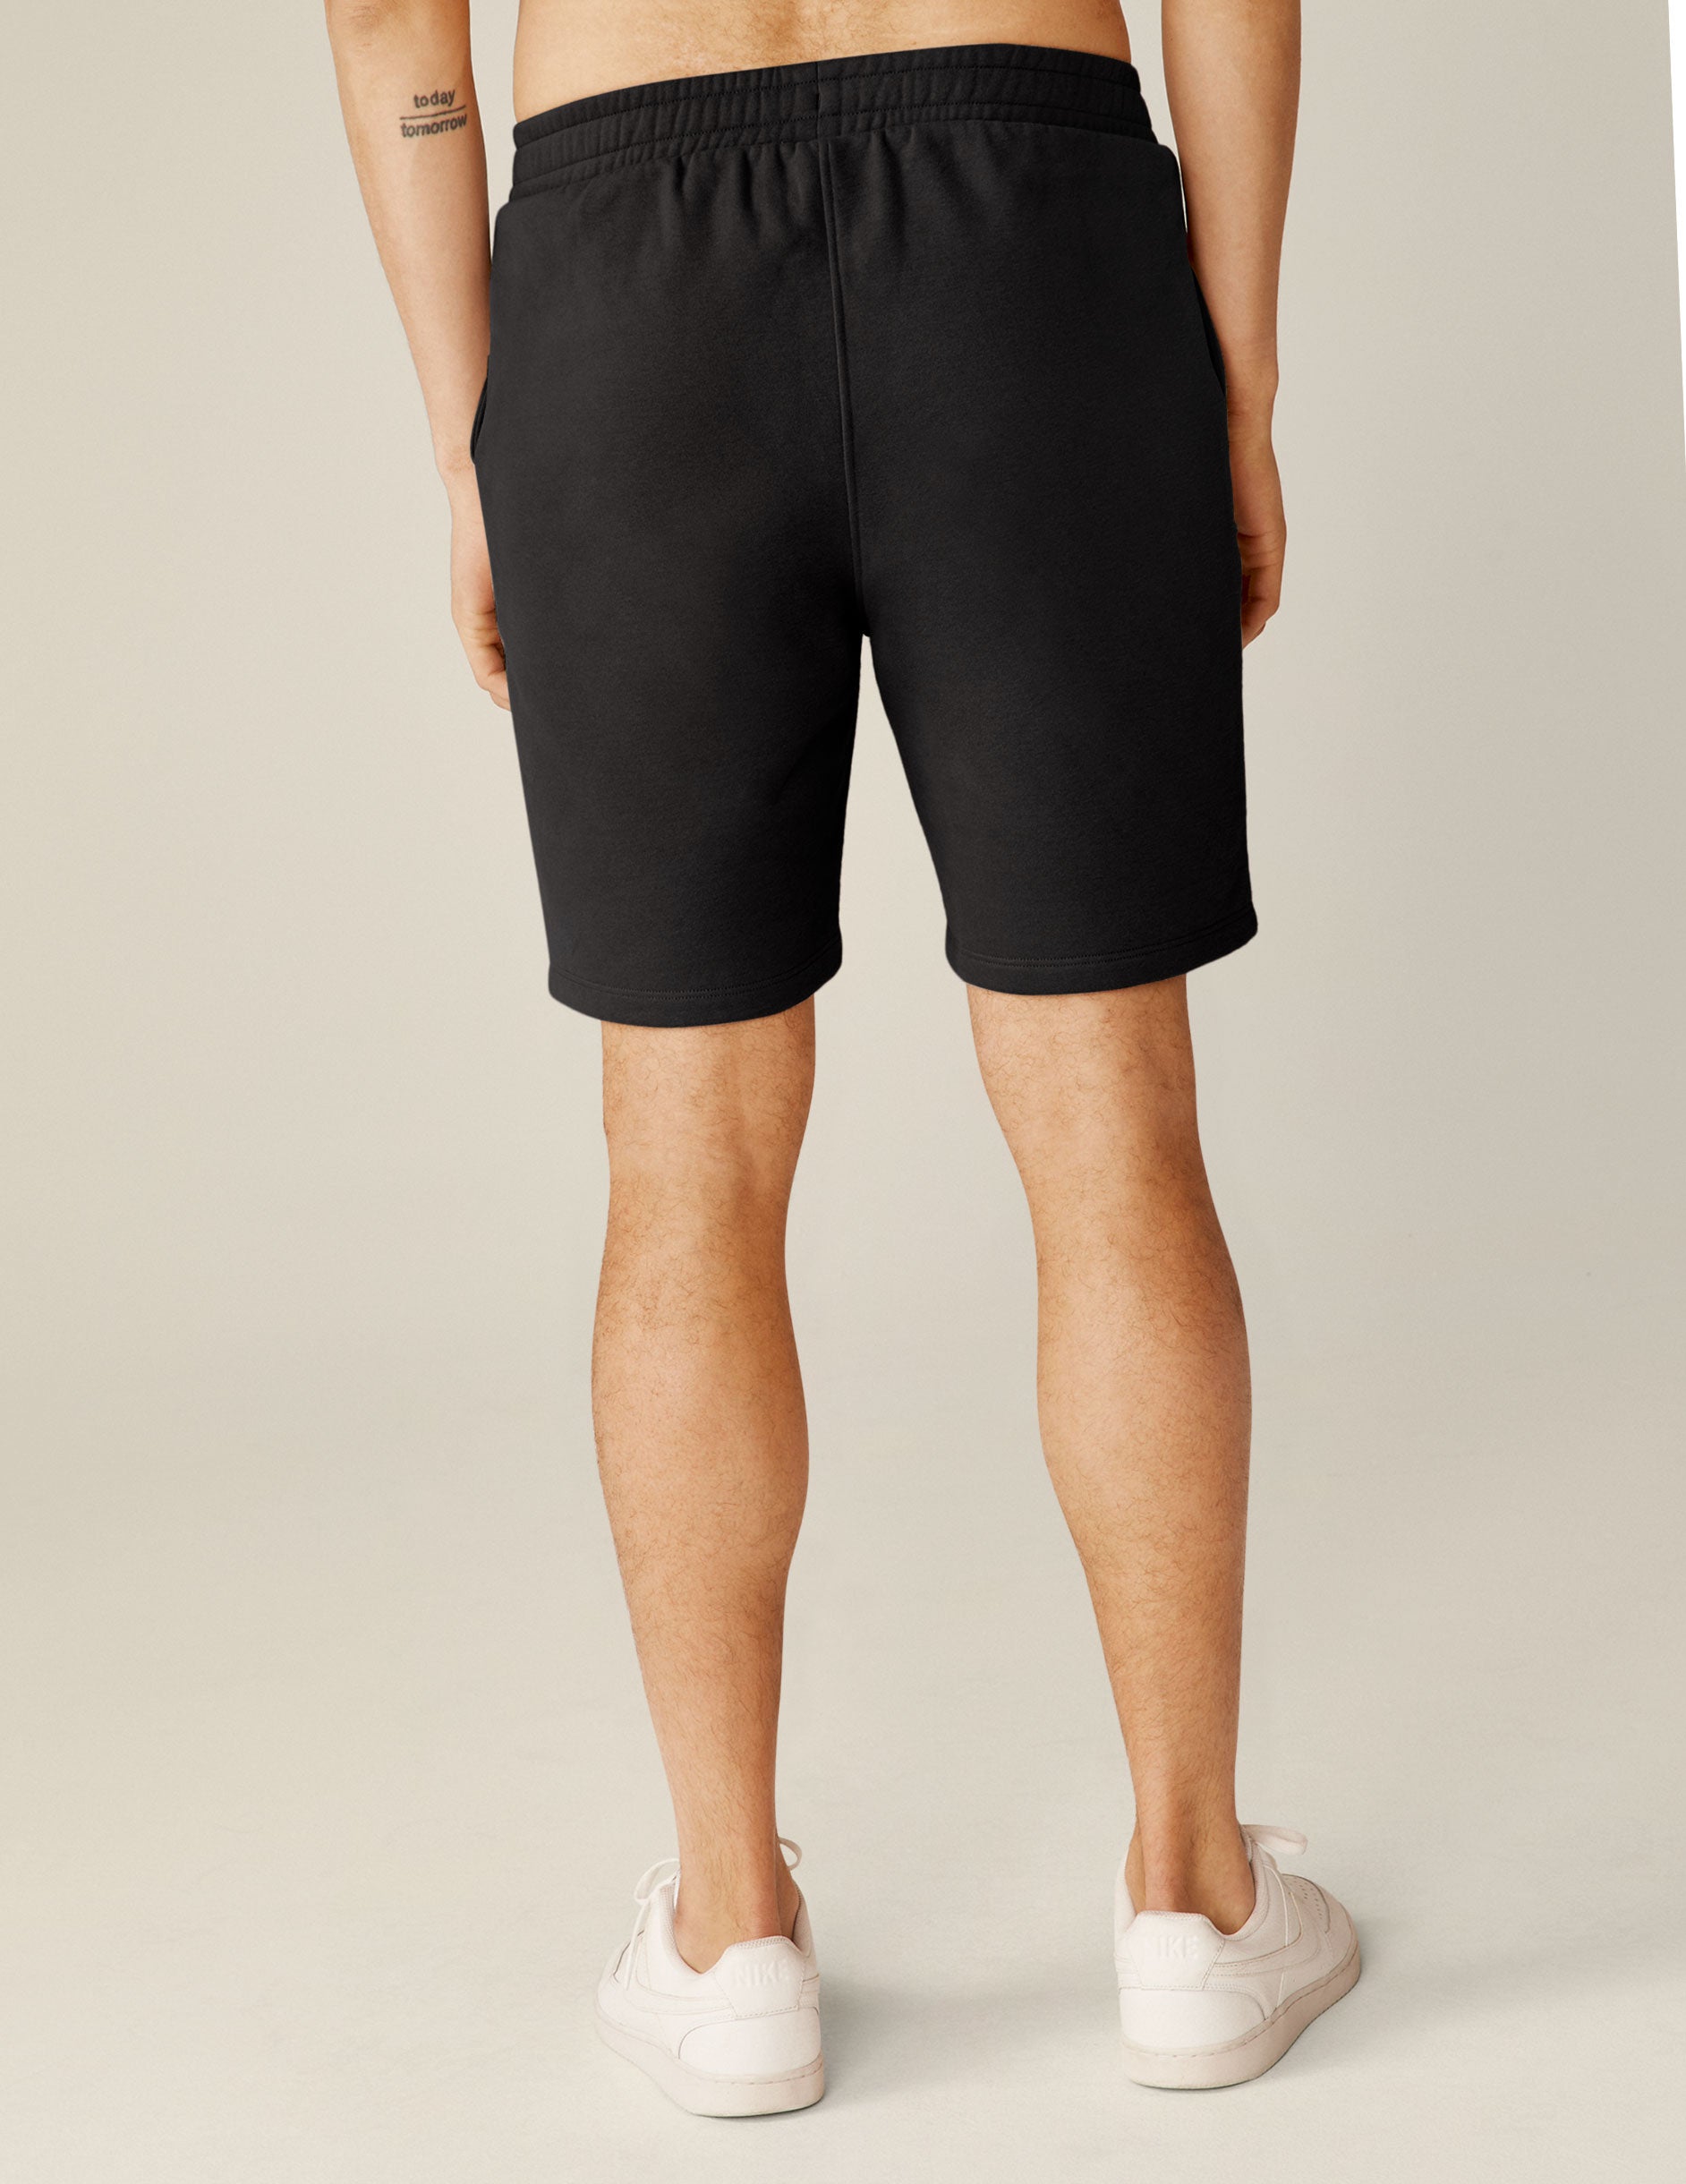 black men's shorts with pockets. 